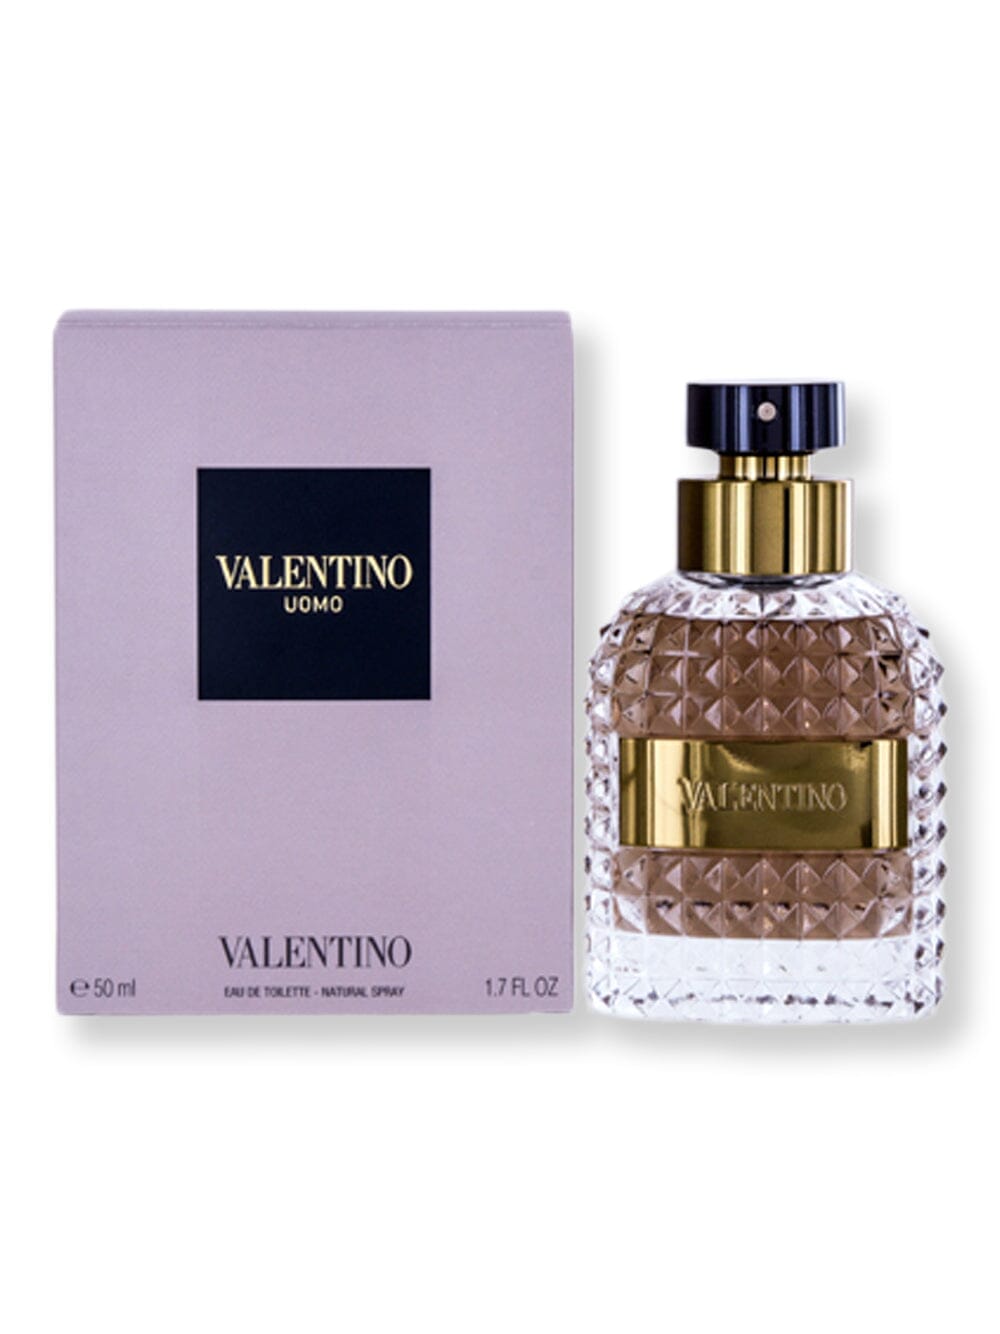 Valentino Valentino Uomo EDT Spray 1.7 oz50 ml Perfume 